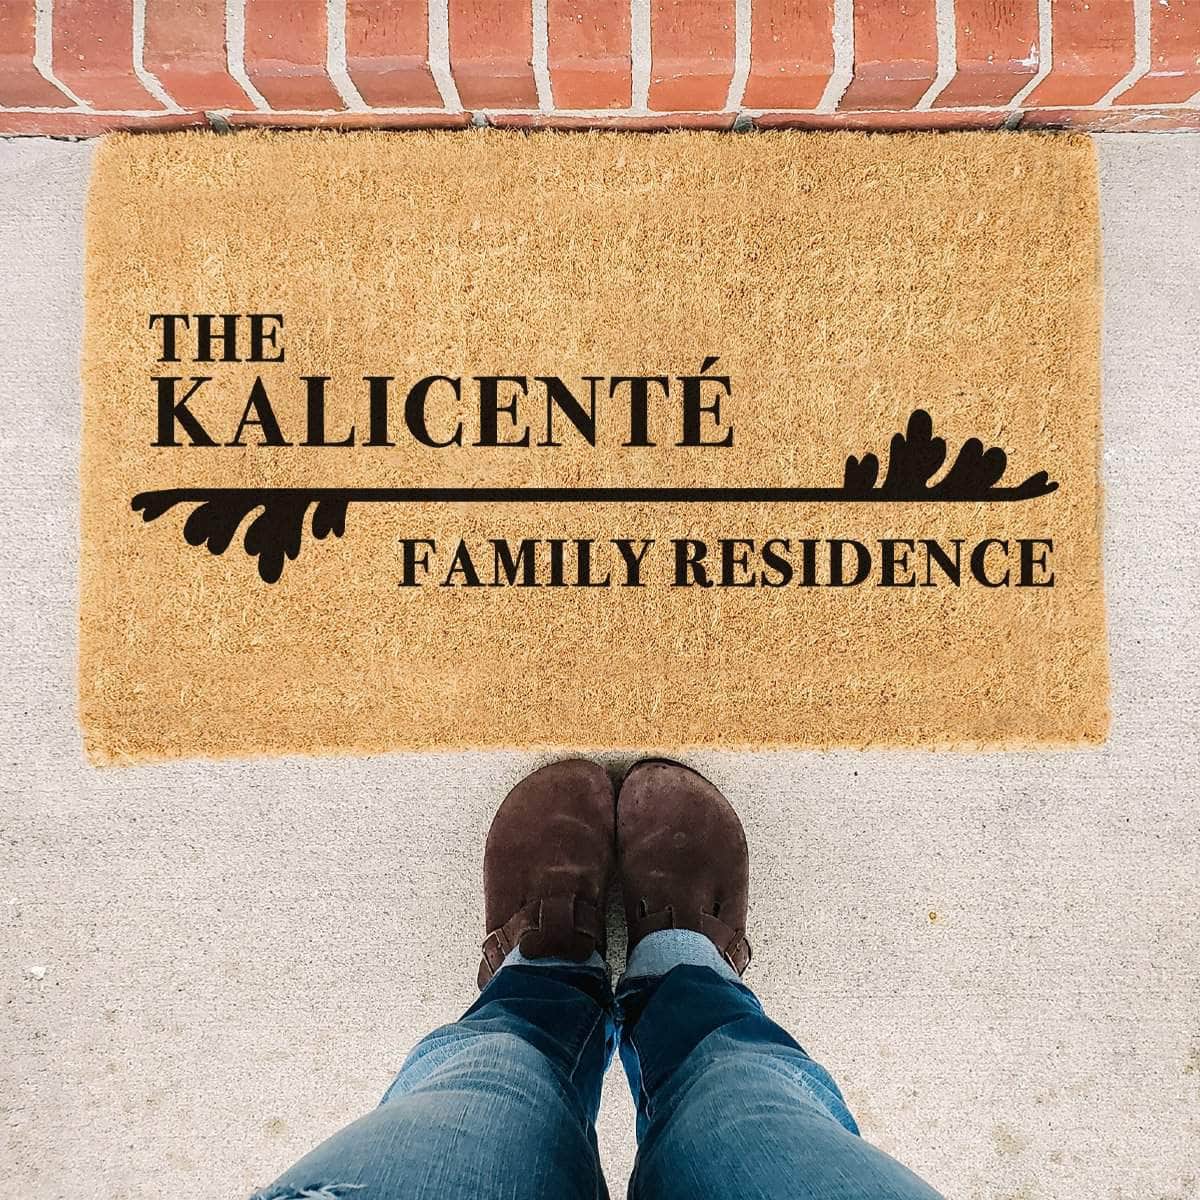 Family Residence - Doormat